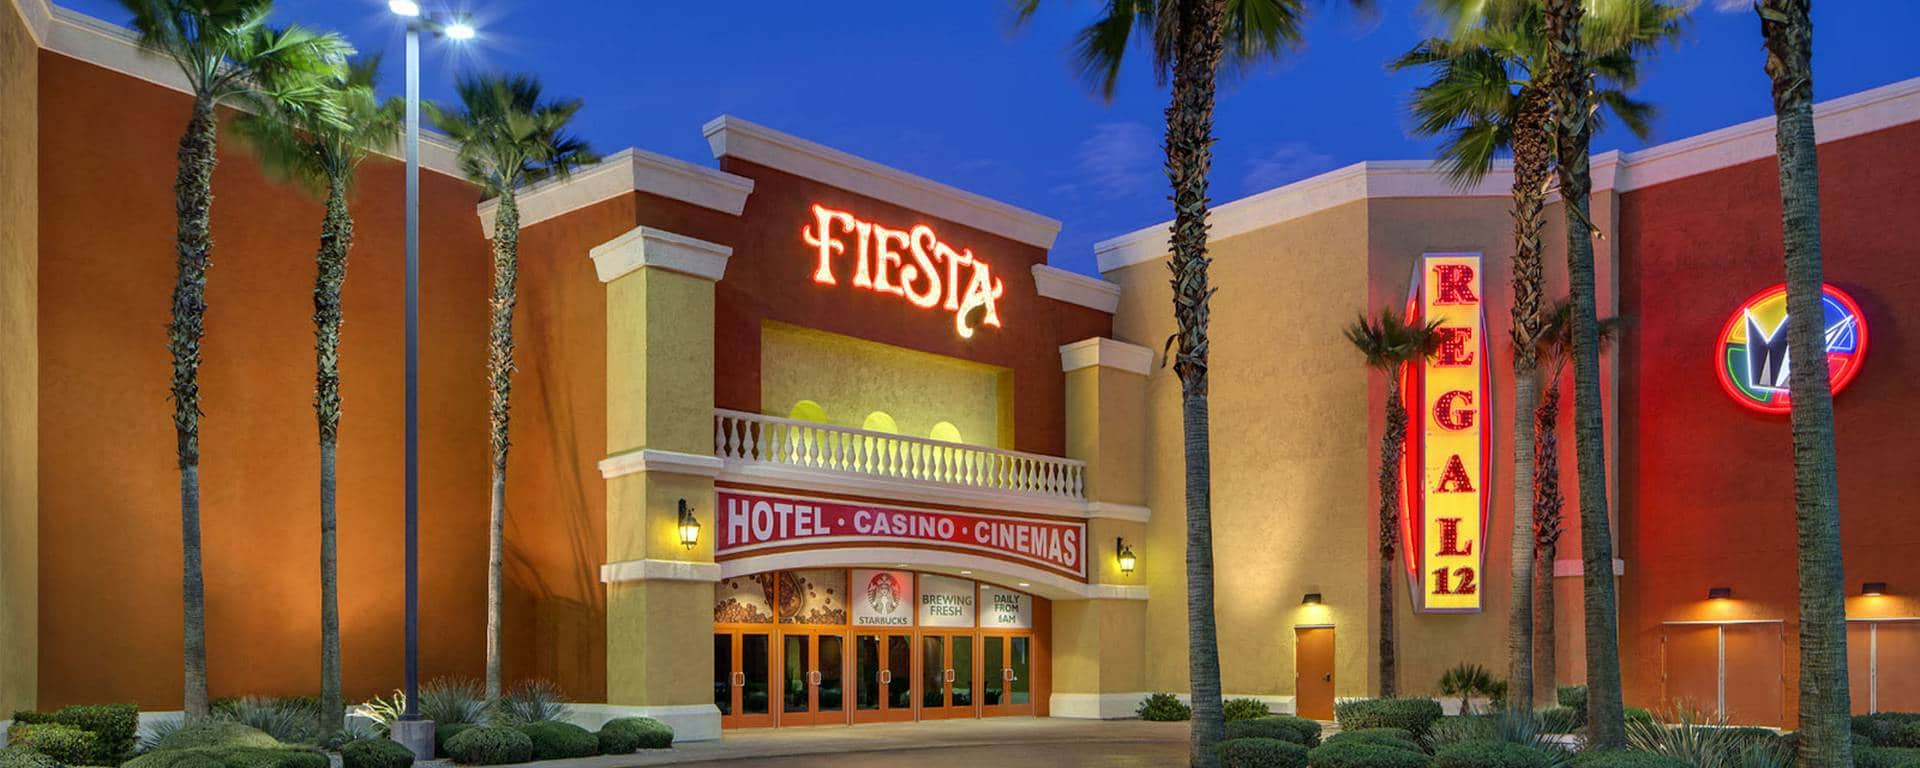 fiesta henderson hotel and casino